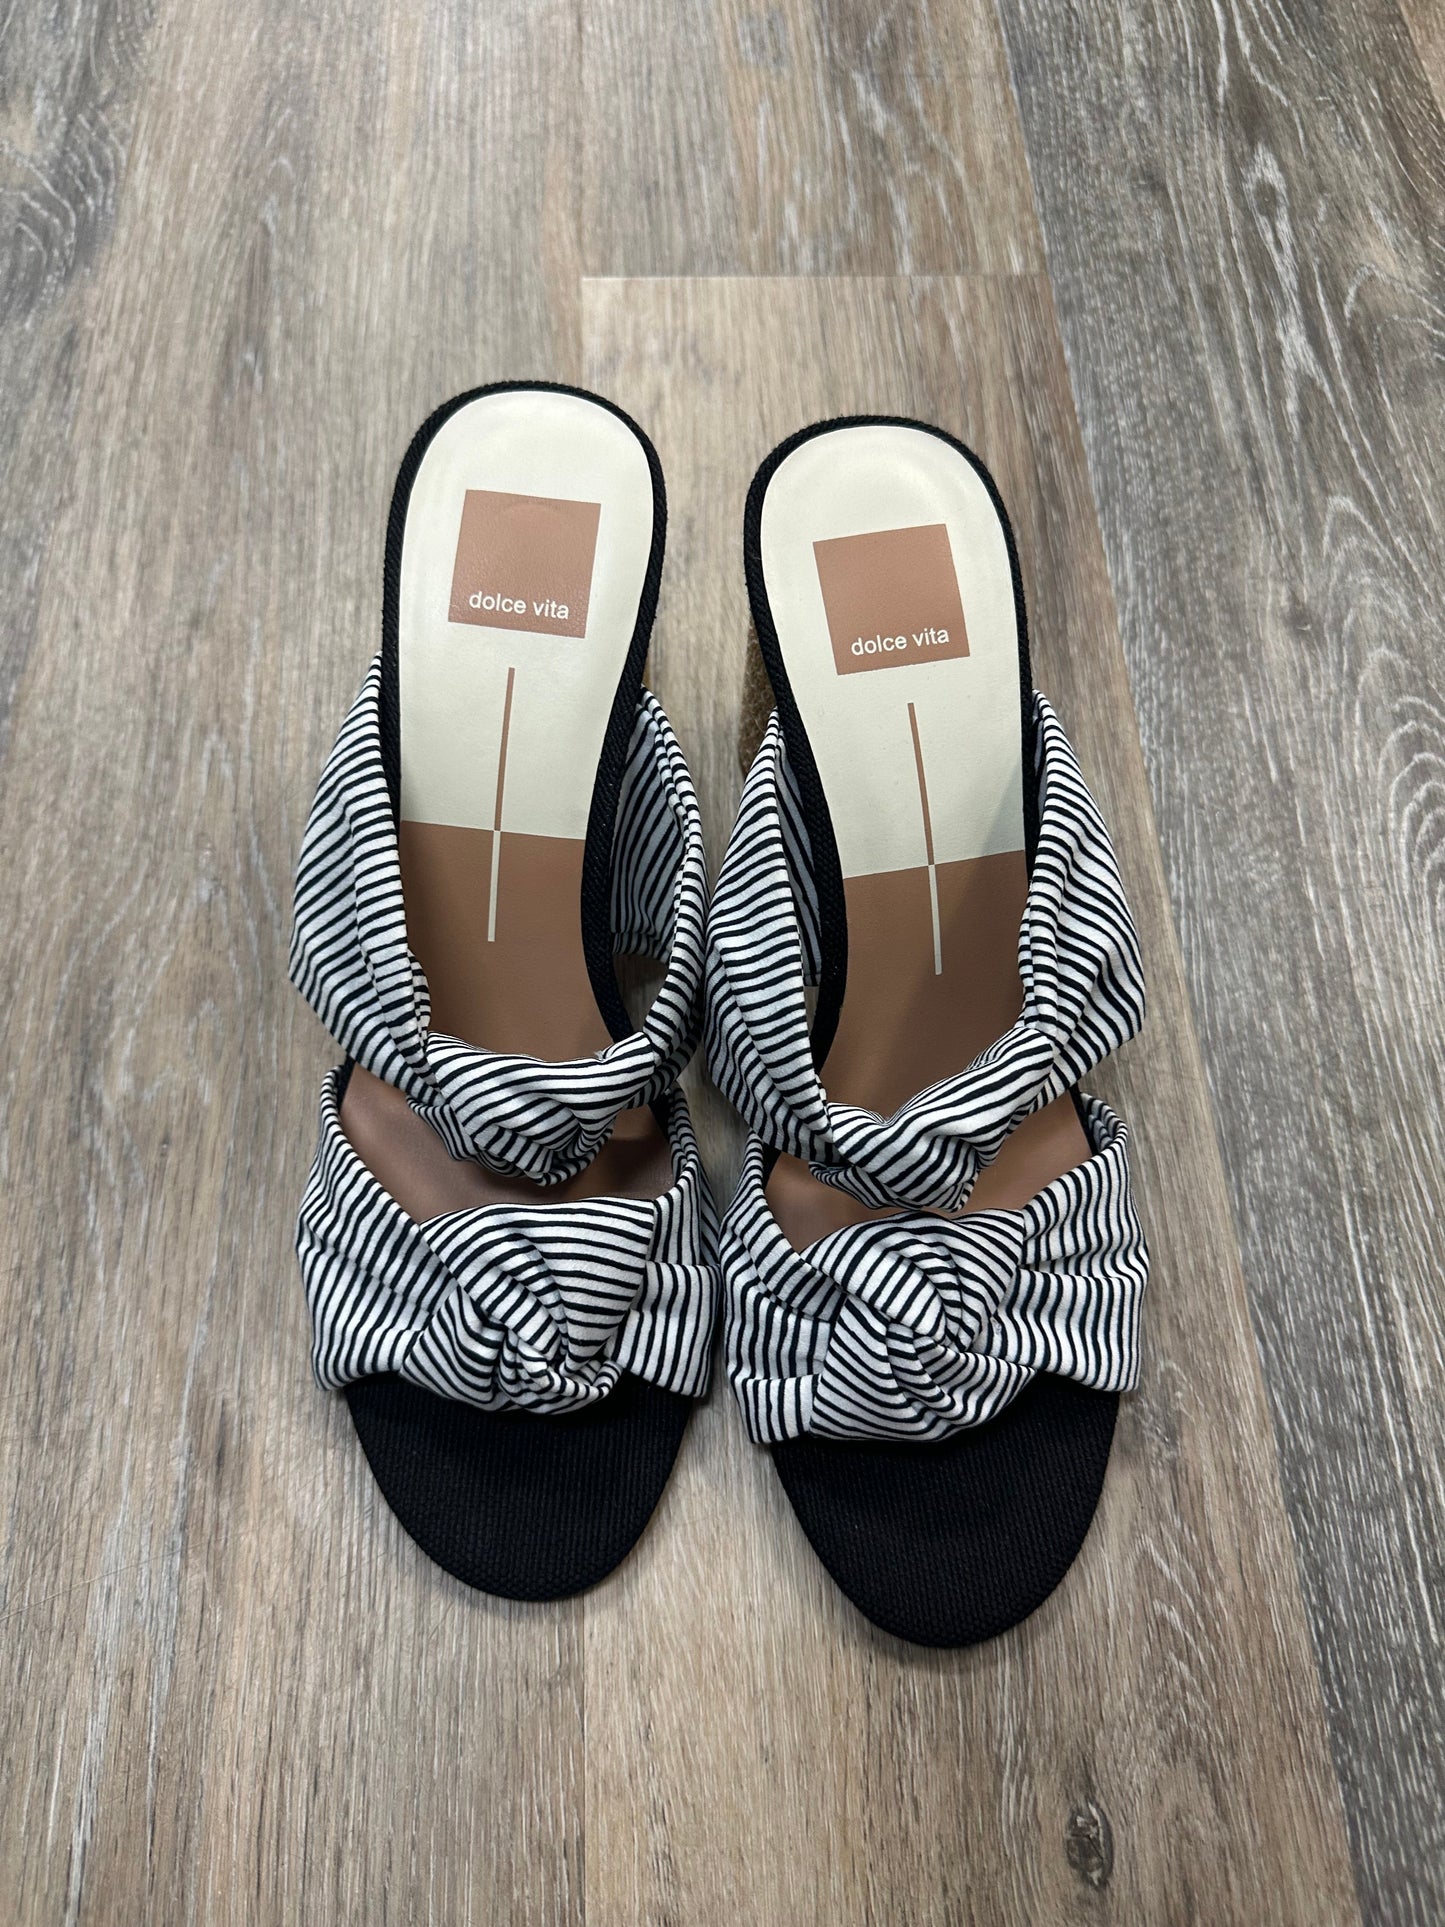 Black & White Sandals Heels Block Dolce Vita, Size 9.5